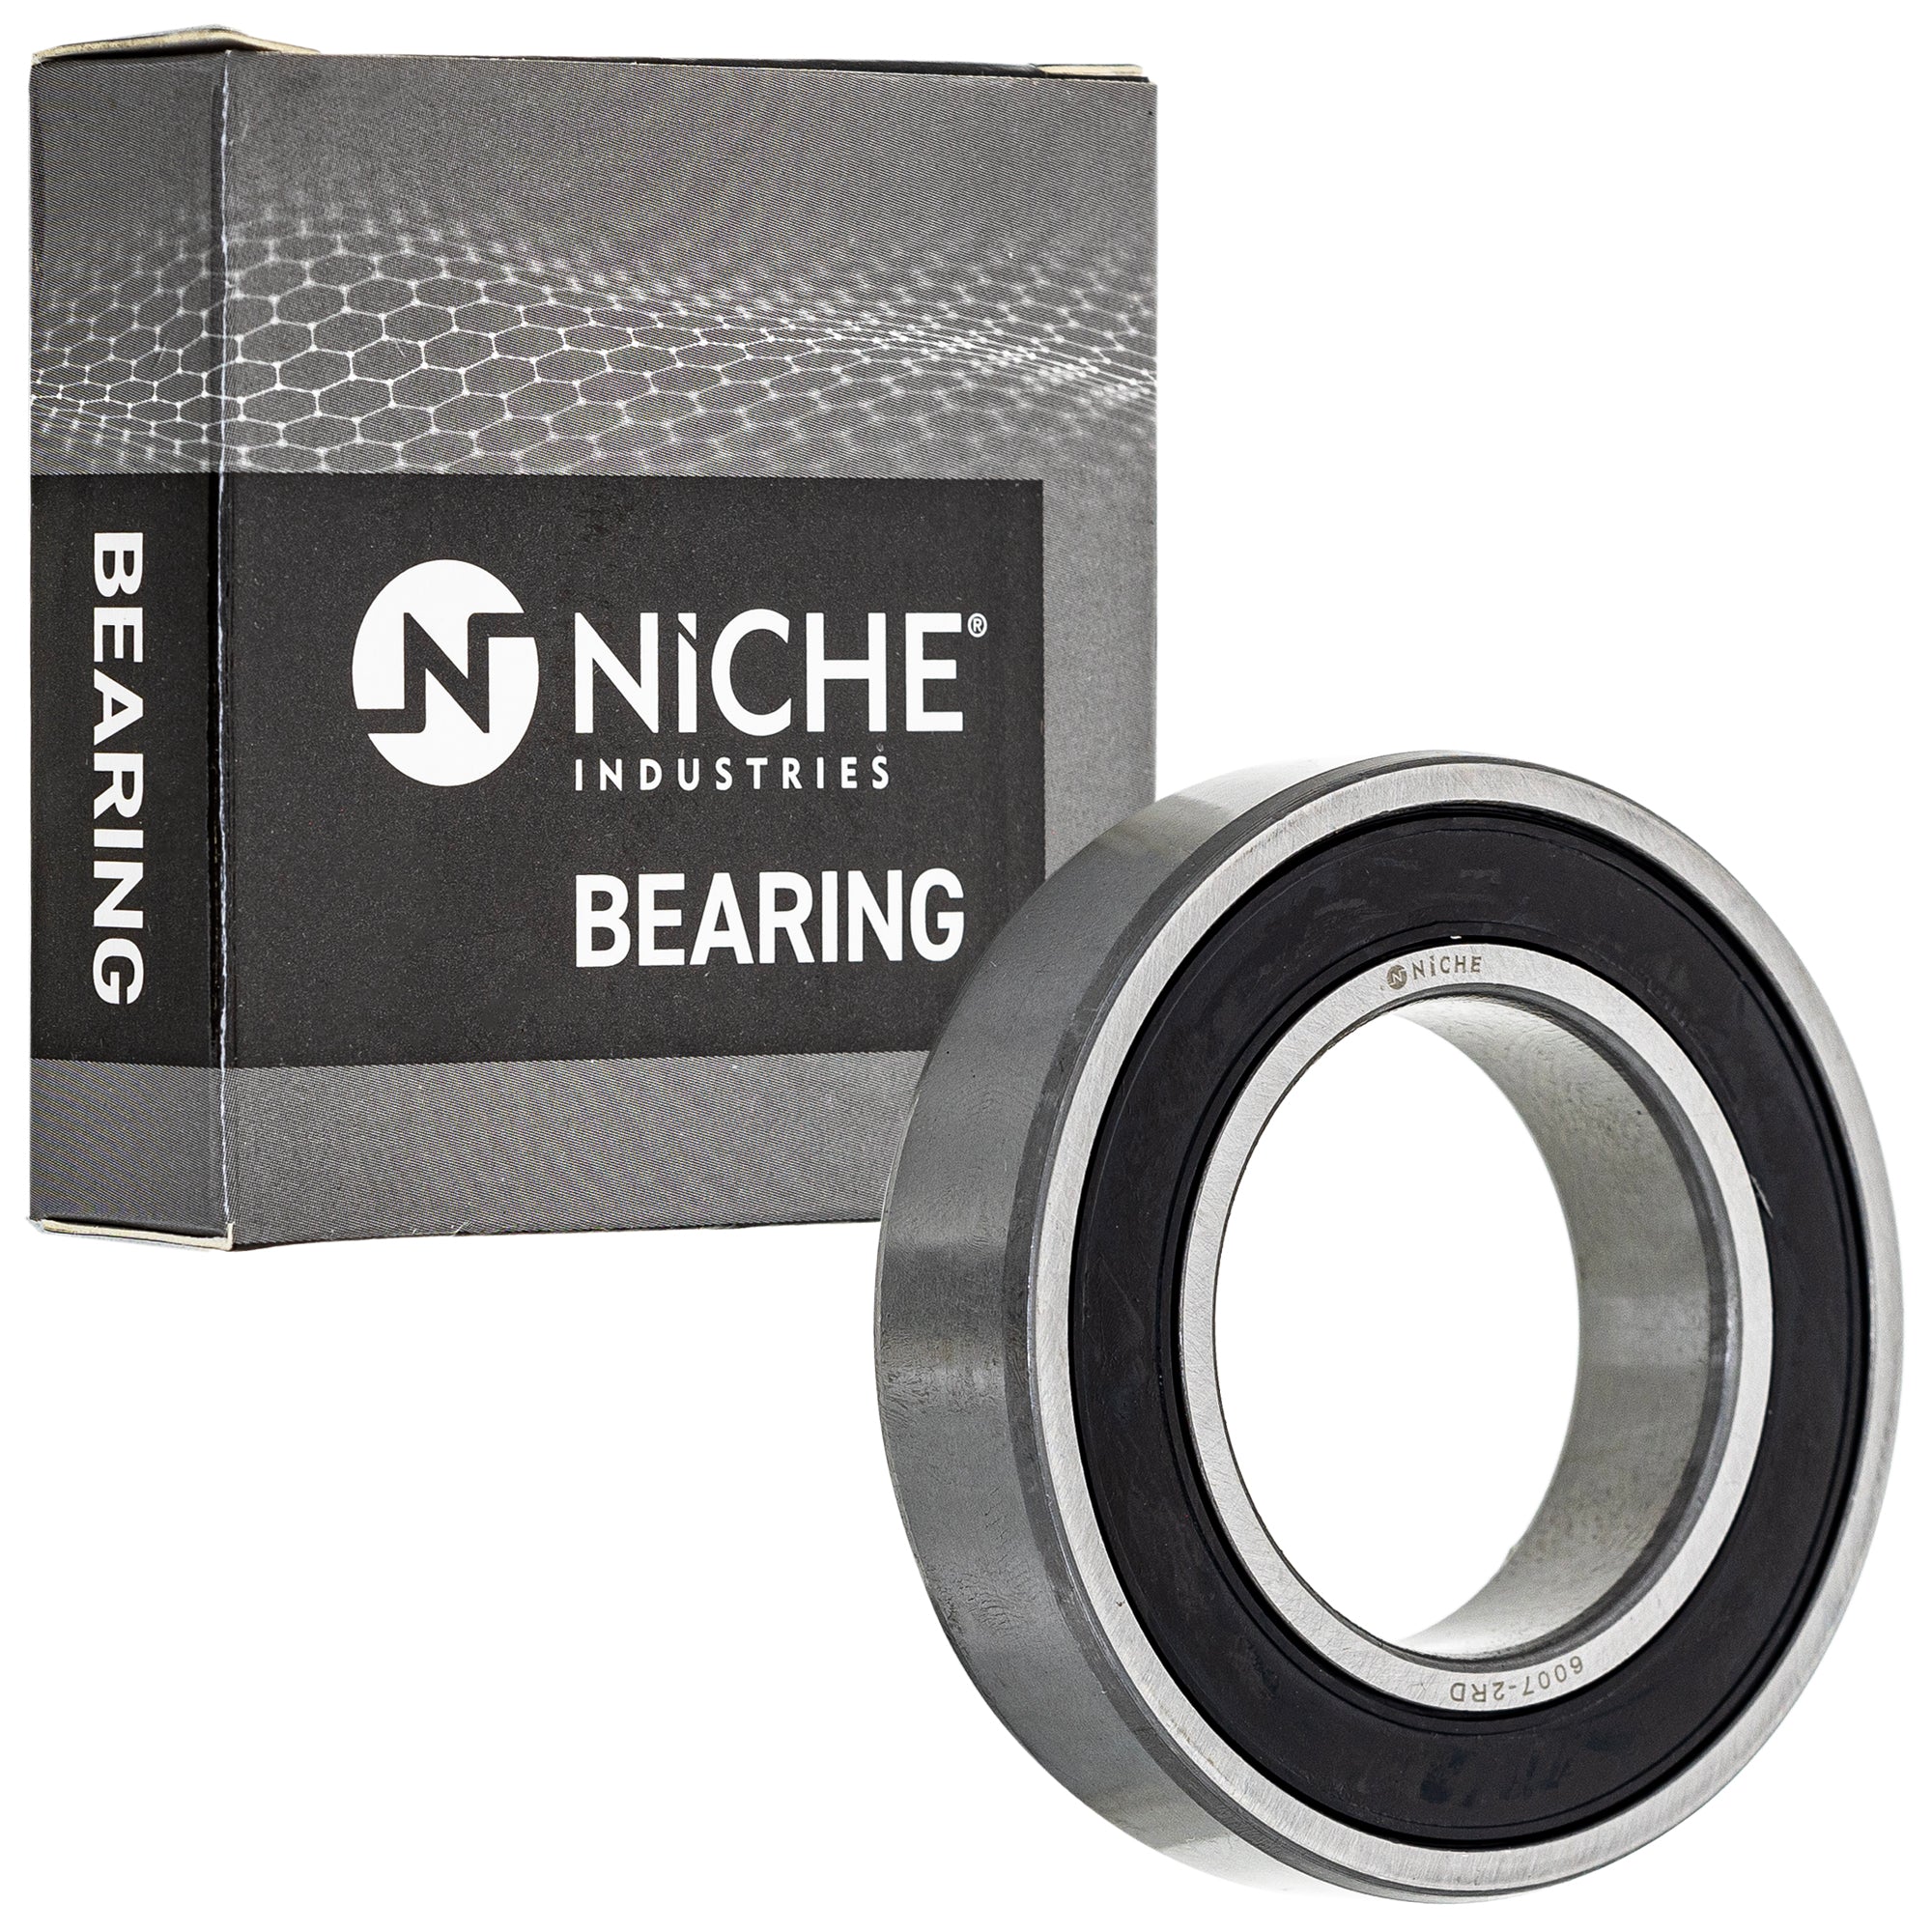 NICHE 519-CBB2274R Bearing for zOTHER XR650R TRX450 TRX400 TRX300